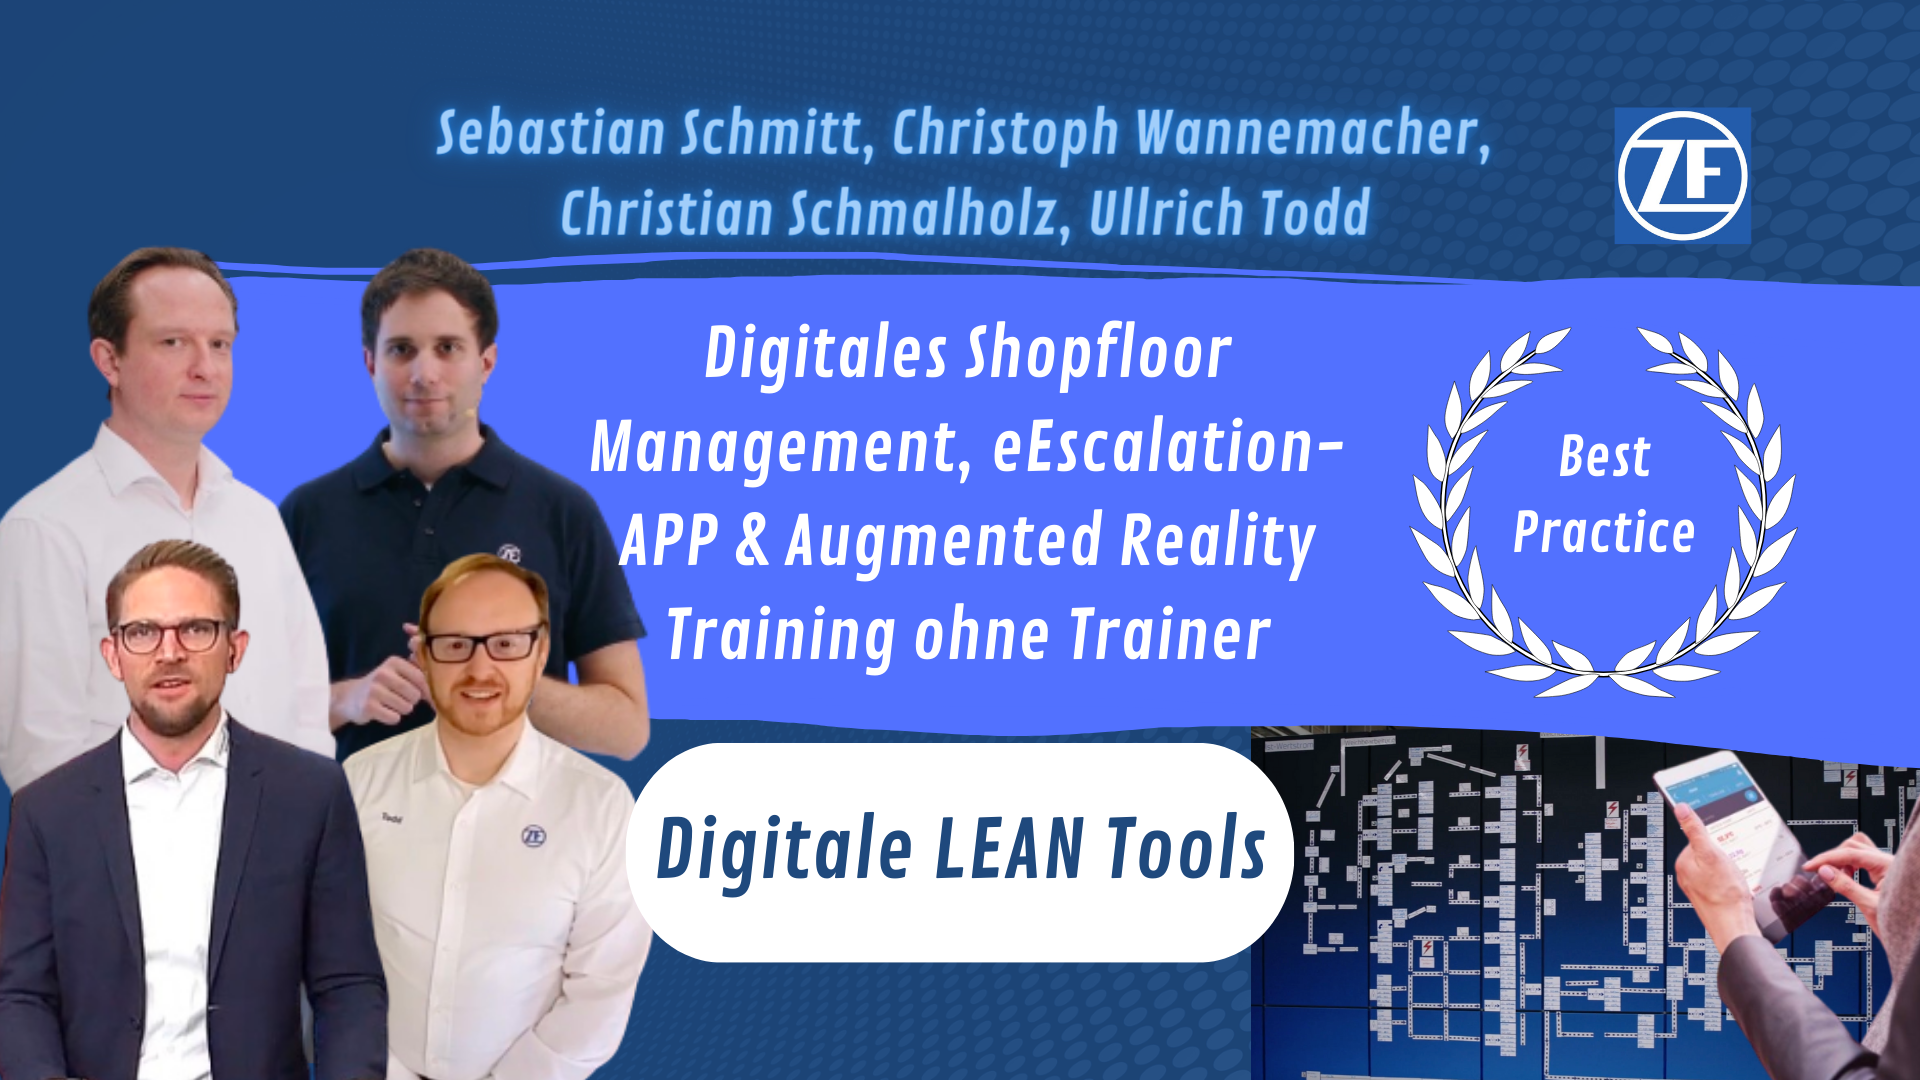 LEAN - Digital LEAN Tools with Sebastian Schmitt, Christoph Wannemacher, Christian Schmalholz, Ullrich Todd